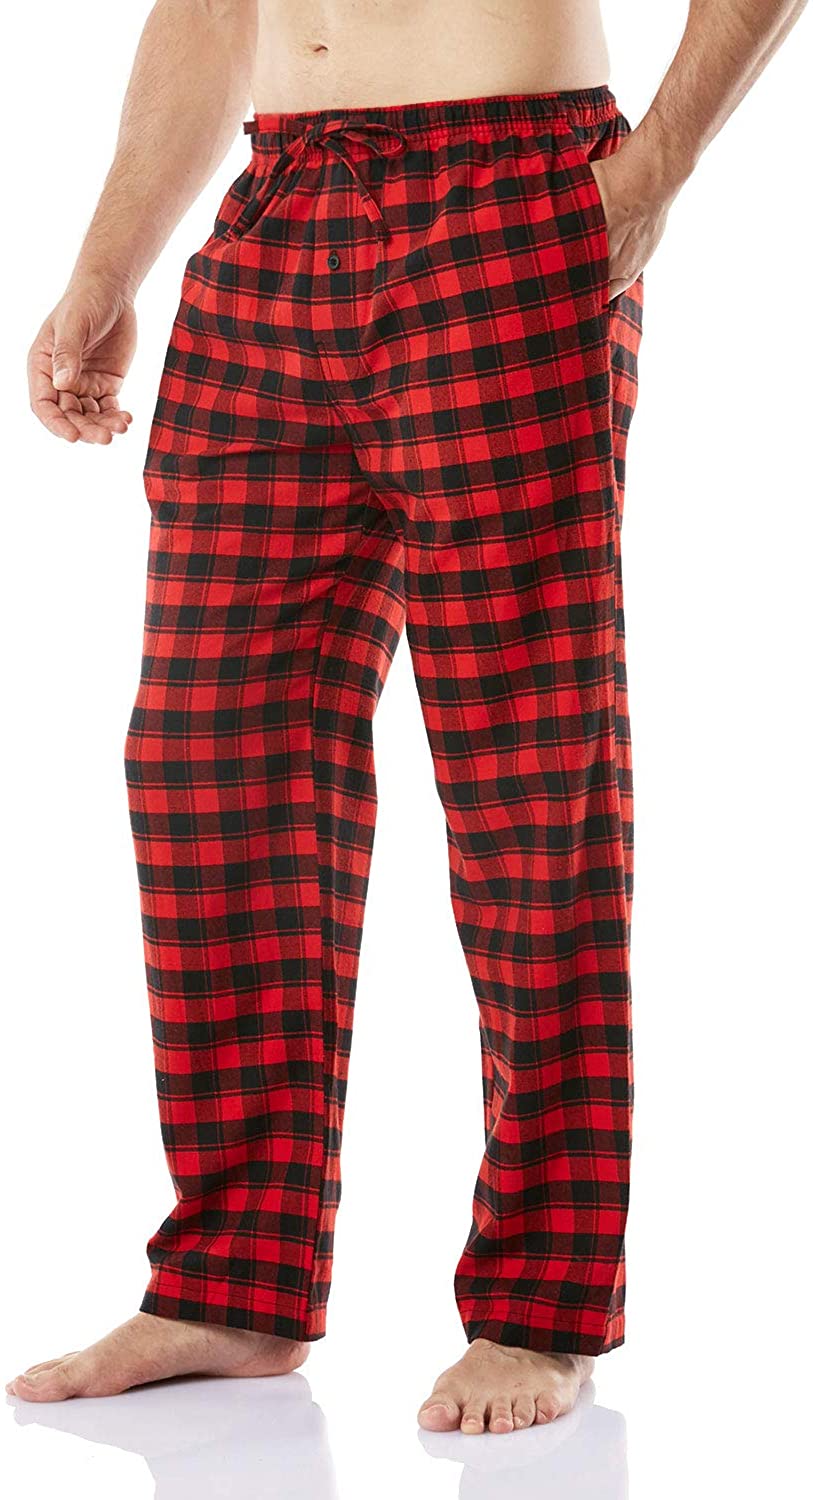 Brushed Soft Lounge & Sleep PJ Top & Bottom with Pockets CQR Men's 100% Cotton Plaid Flannel Pajama Set